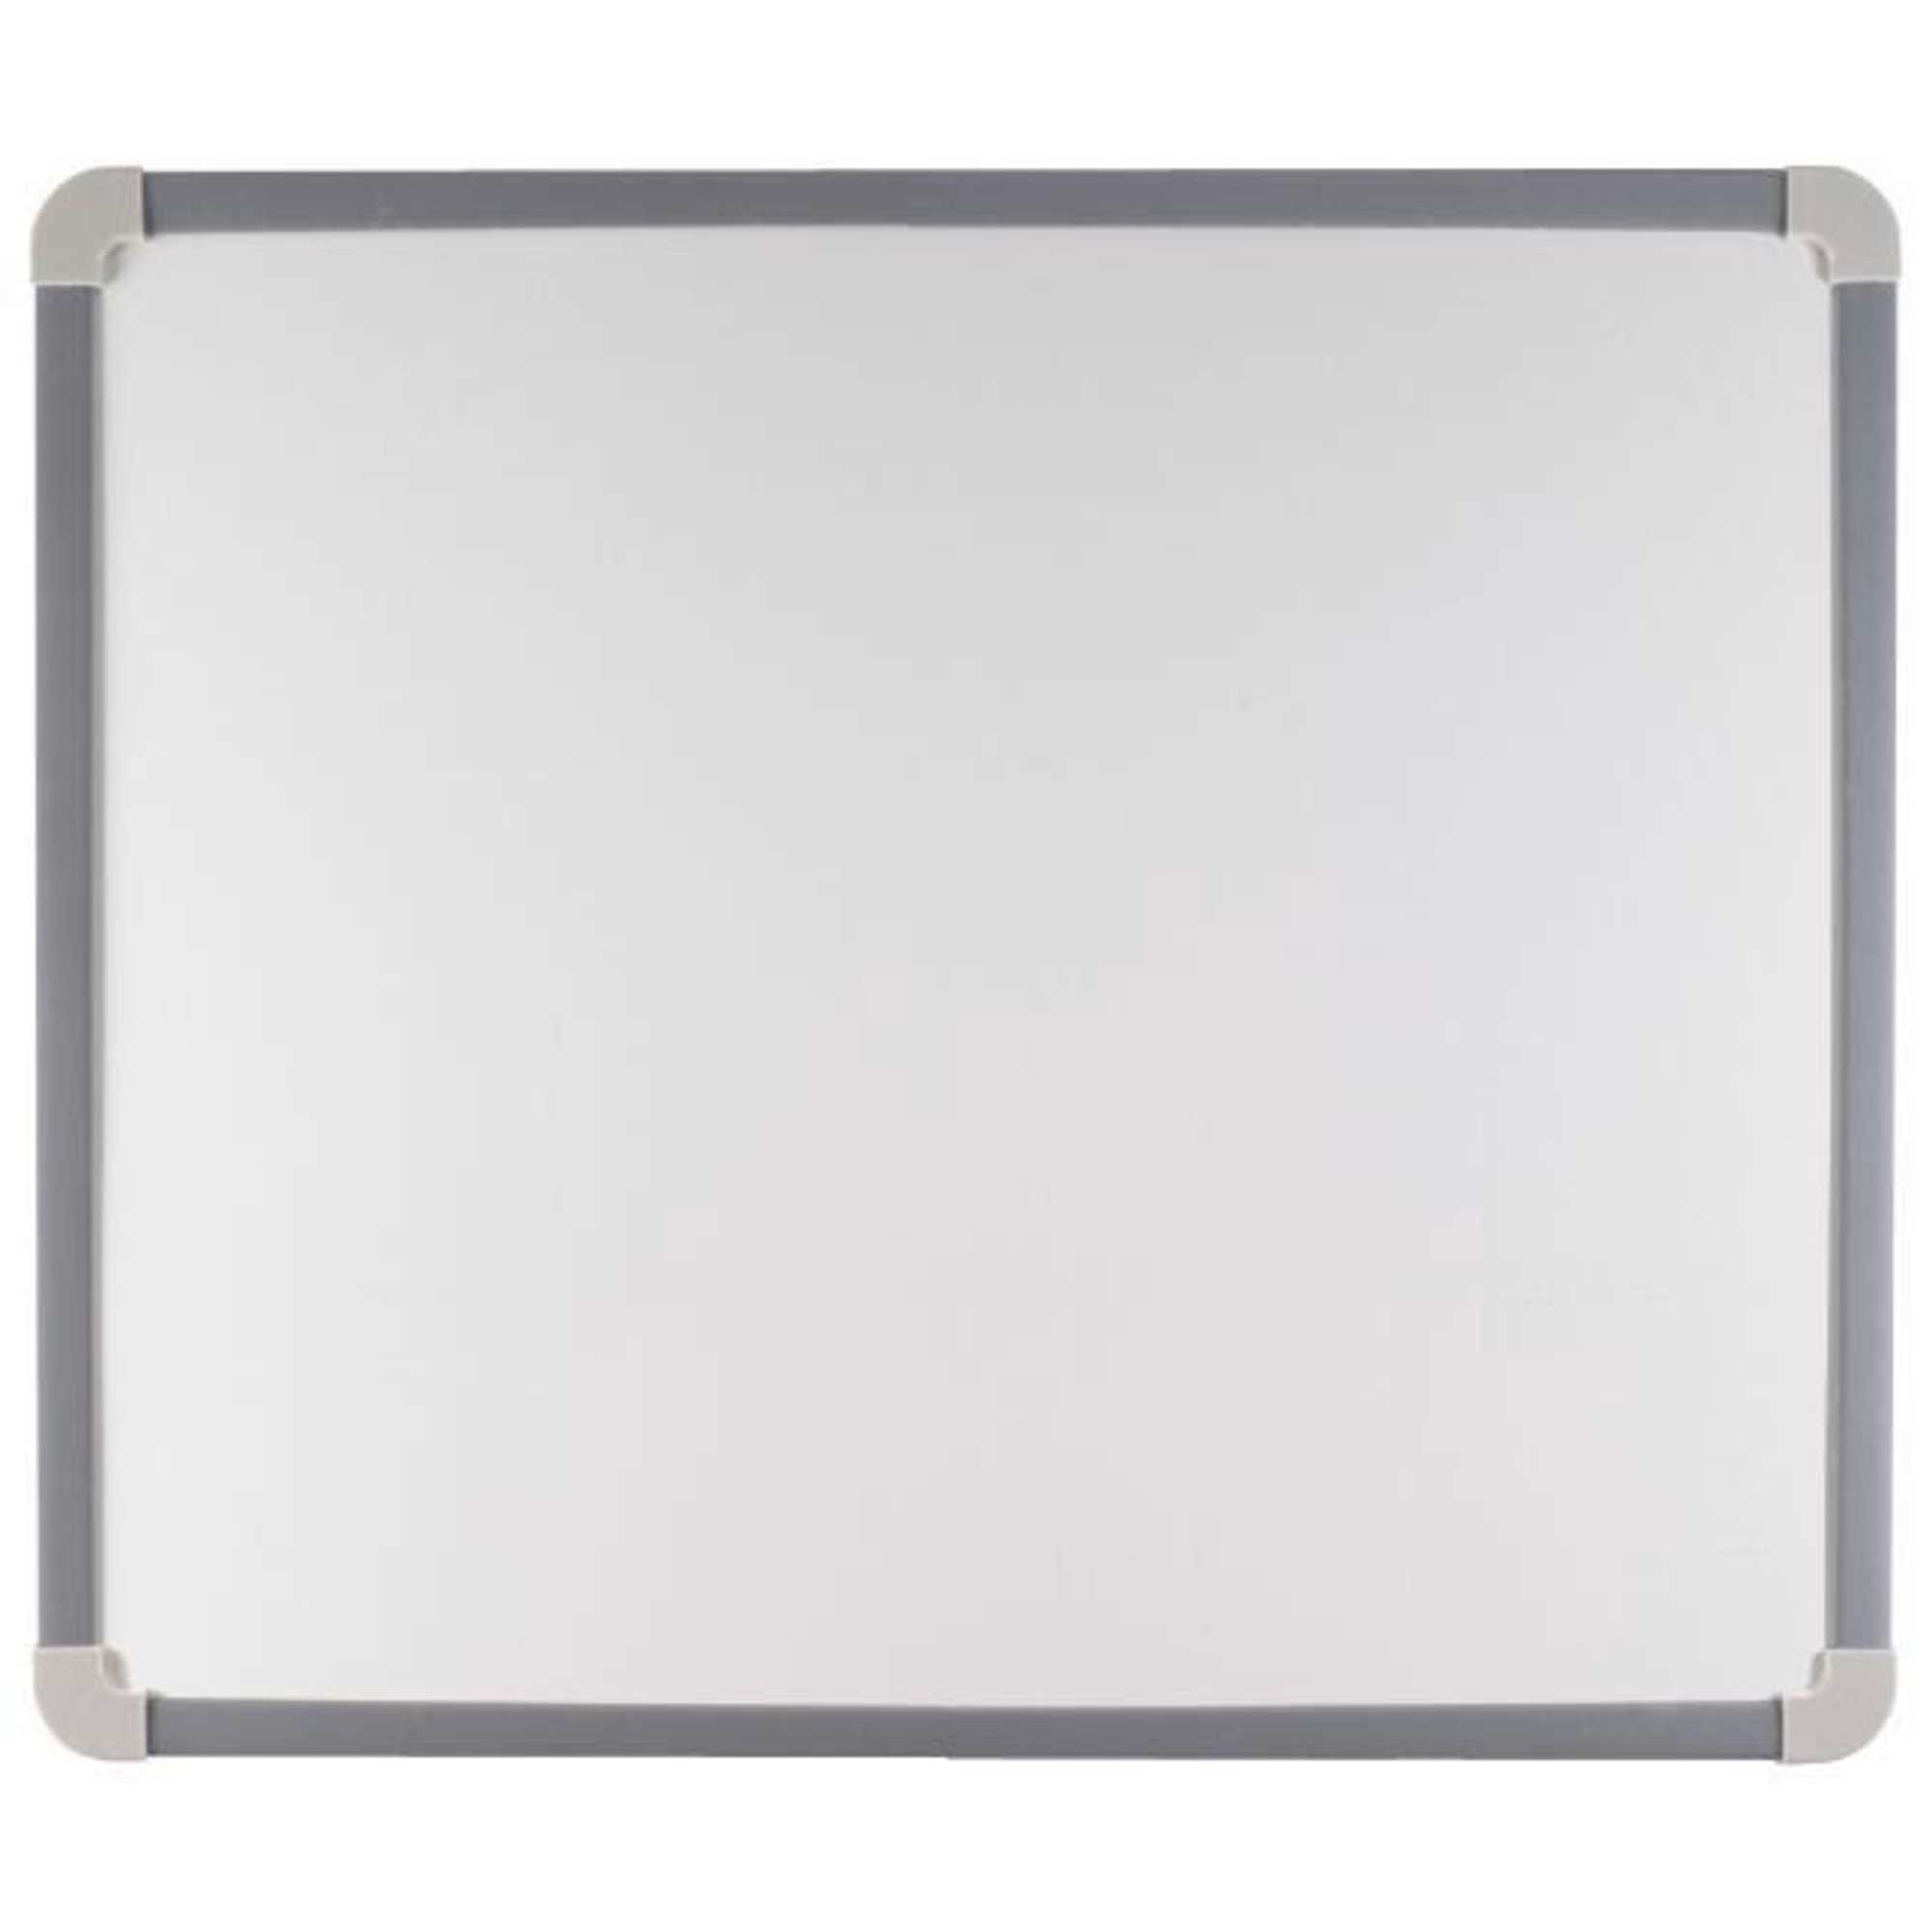 School Smart Medium Magnetic Dry Erase Board, Aluminum Frame, 22 x 17-1/2 Inches - image 1 of 2